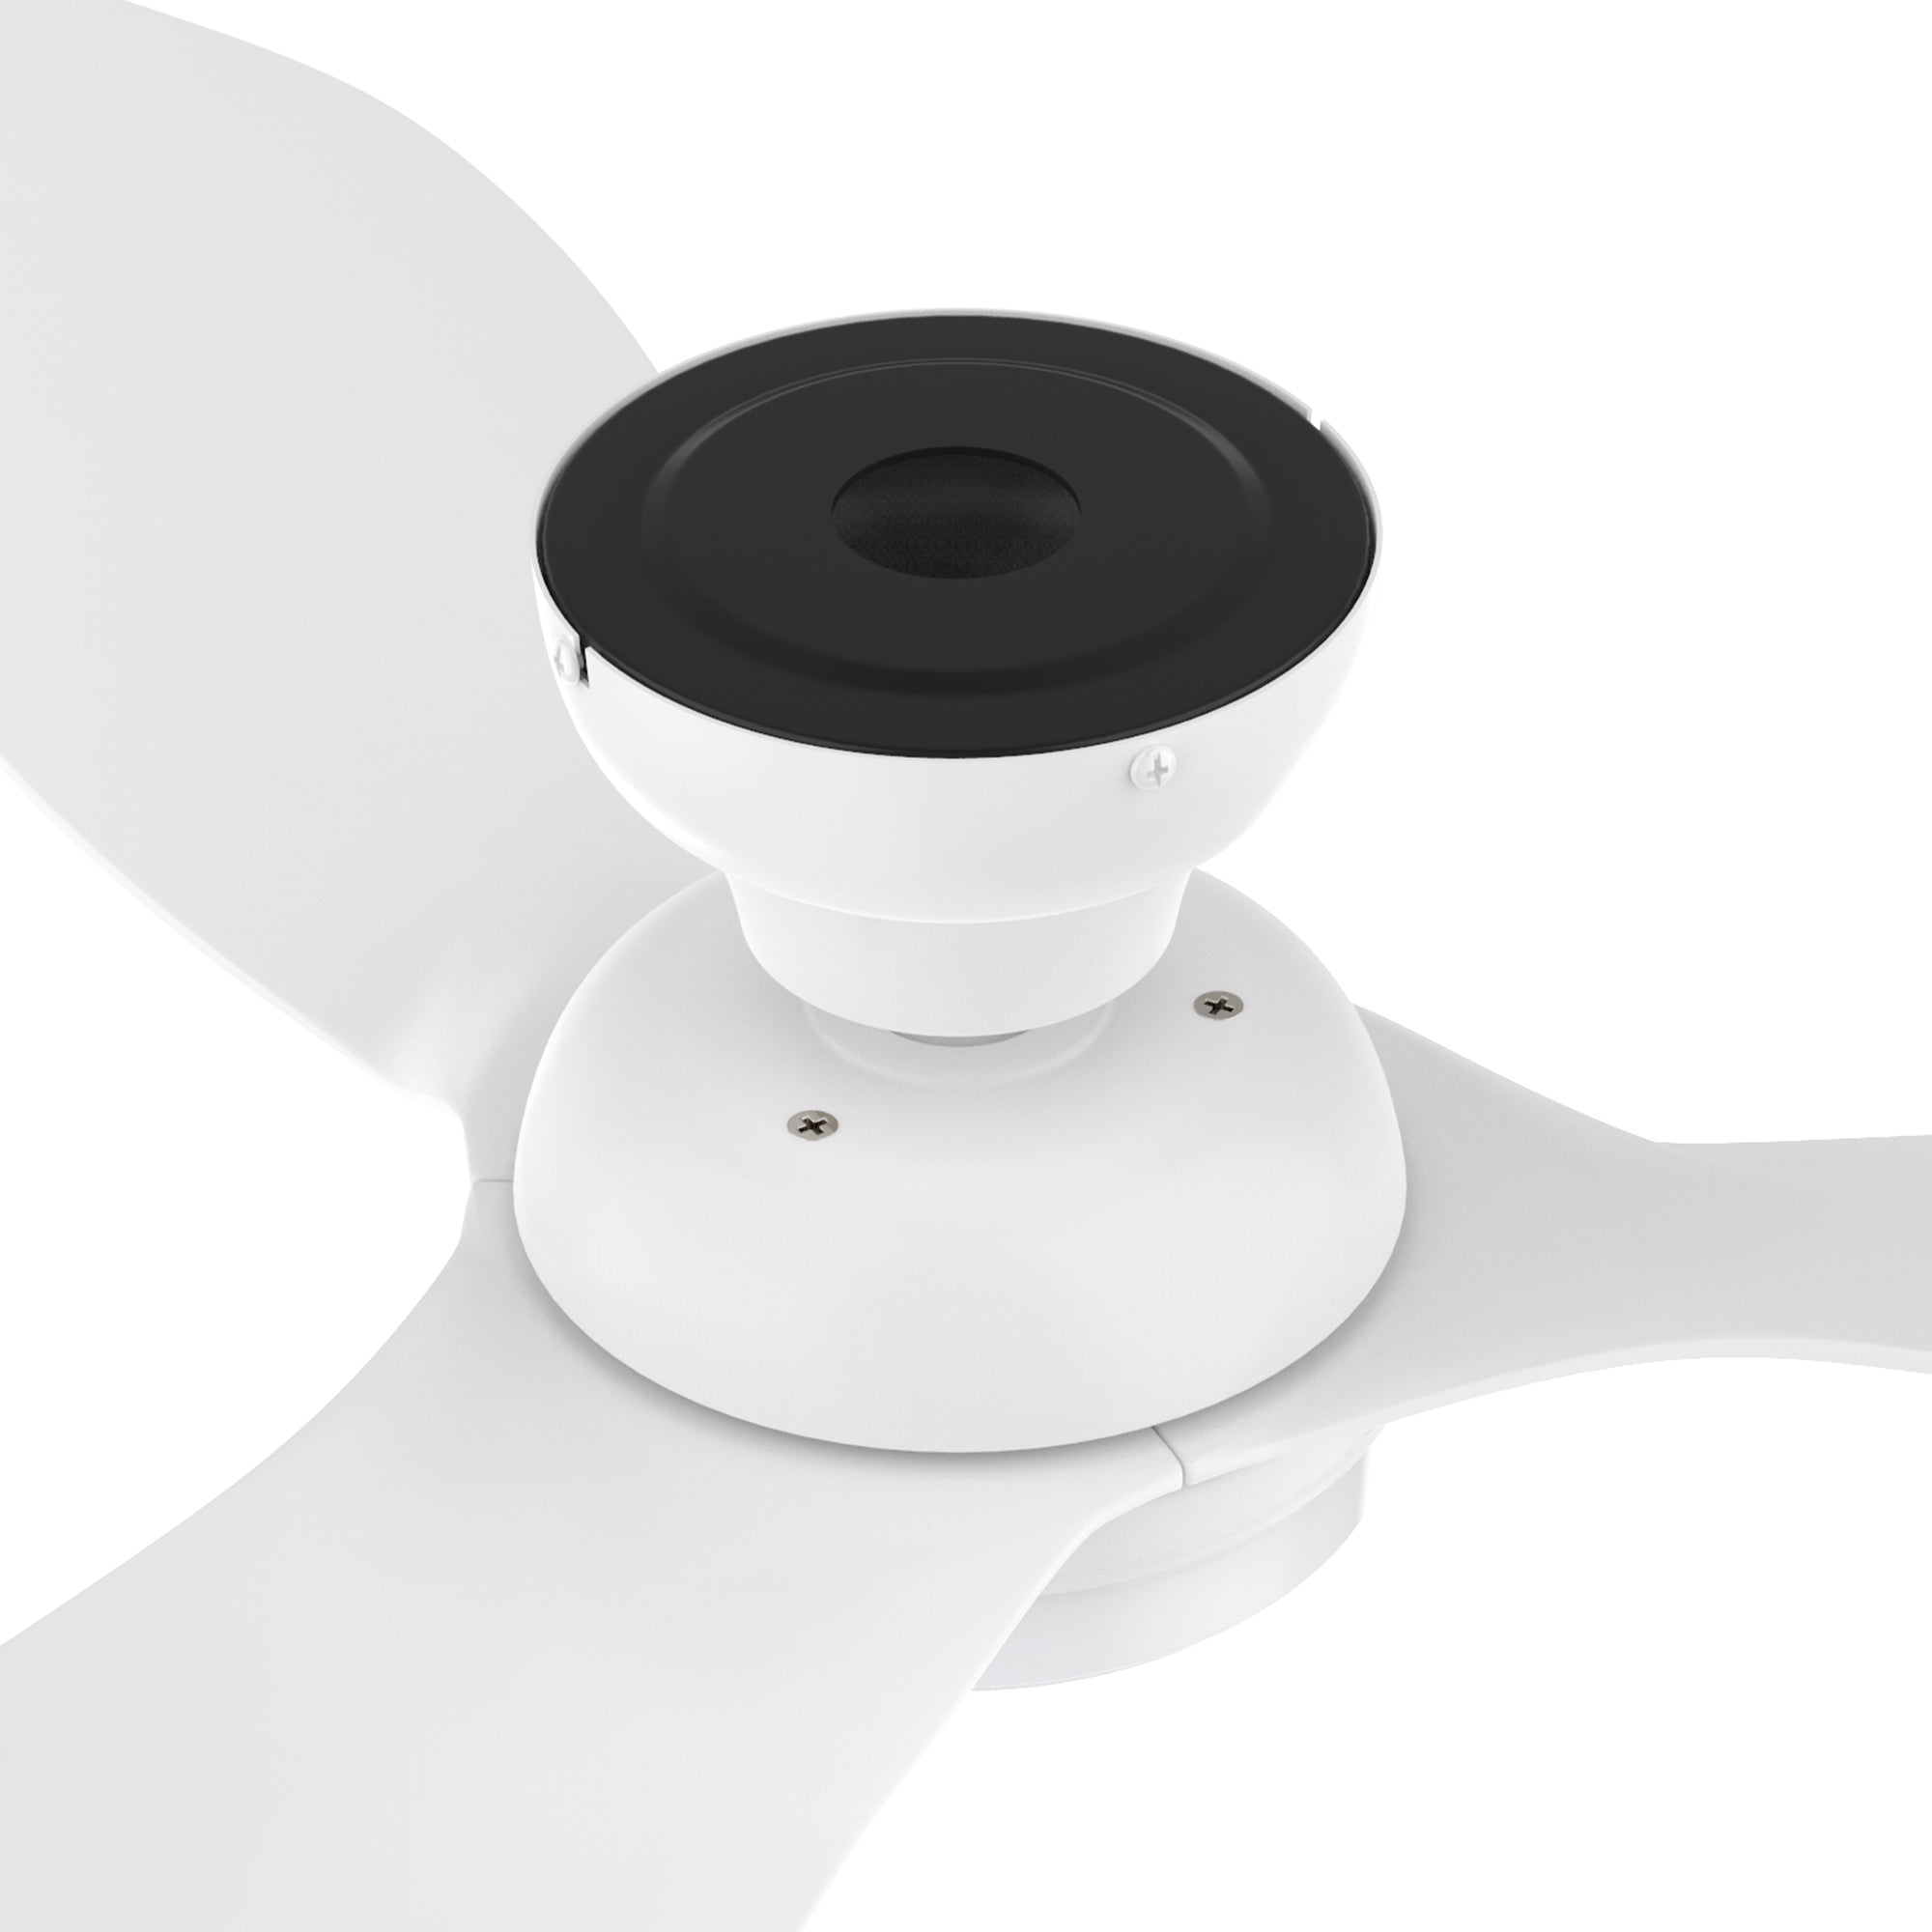 Annecy 45 inch Low Profile Remote Ceiling Fan